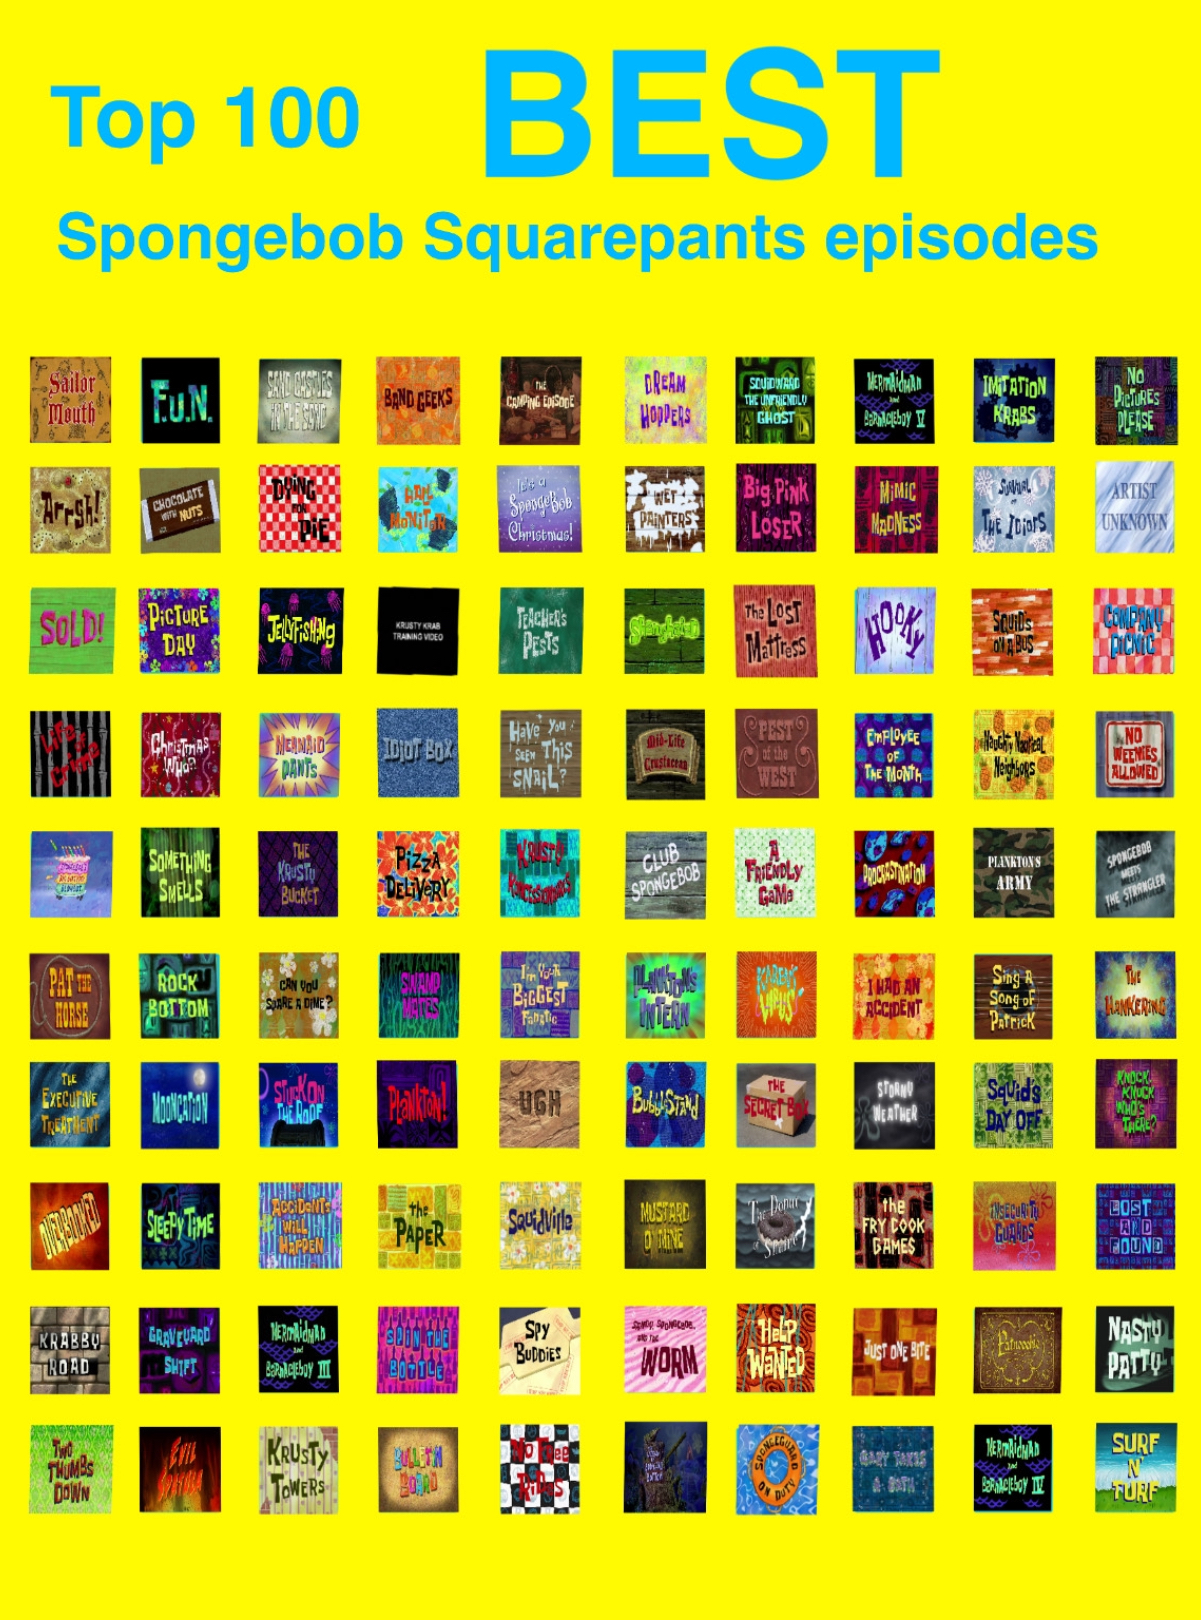 The 100 Best Episodes of SpongeBob Squarepants